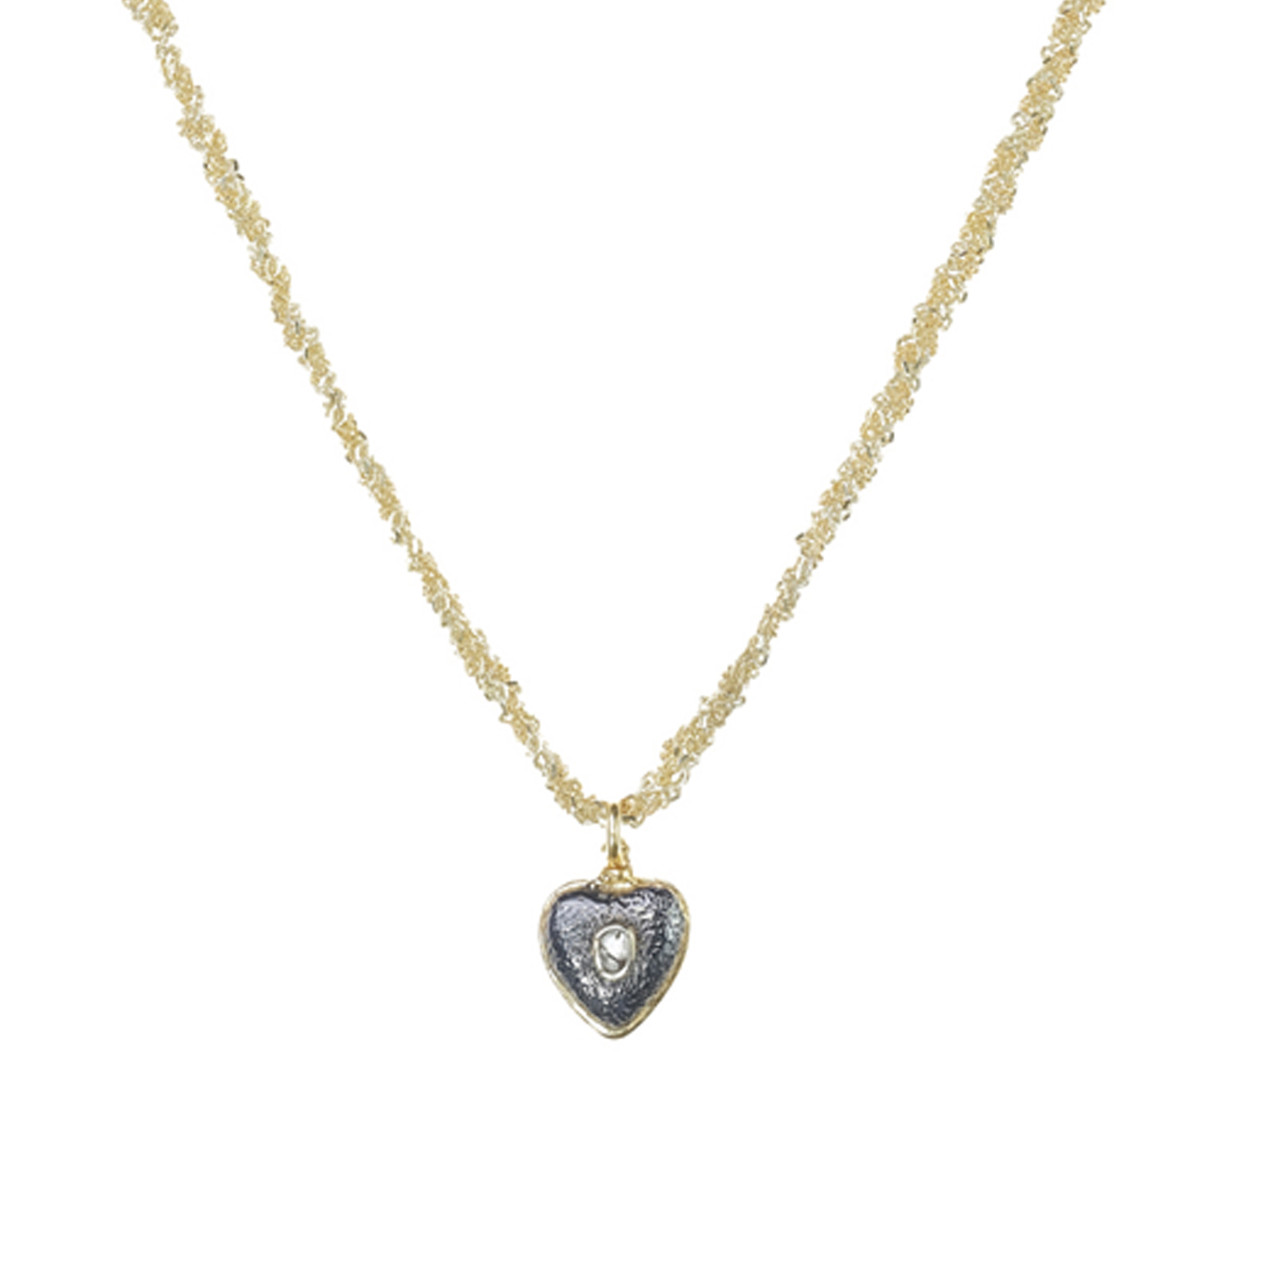 N° 891 Gold & Ruthenium Heart Pendant, Marie Laure Chamorel, tomfoolery